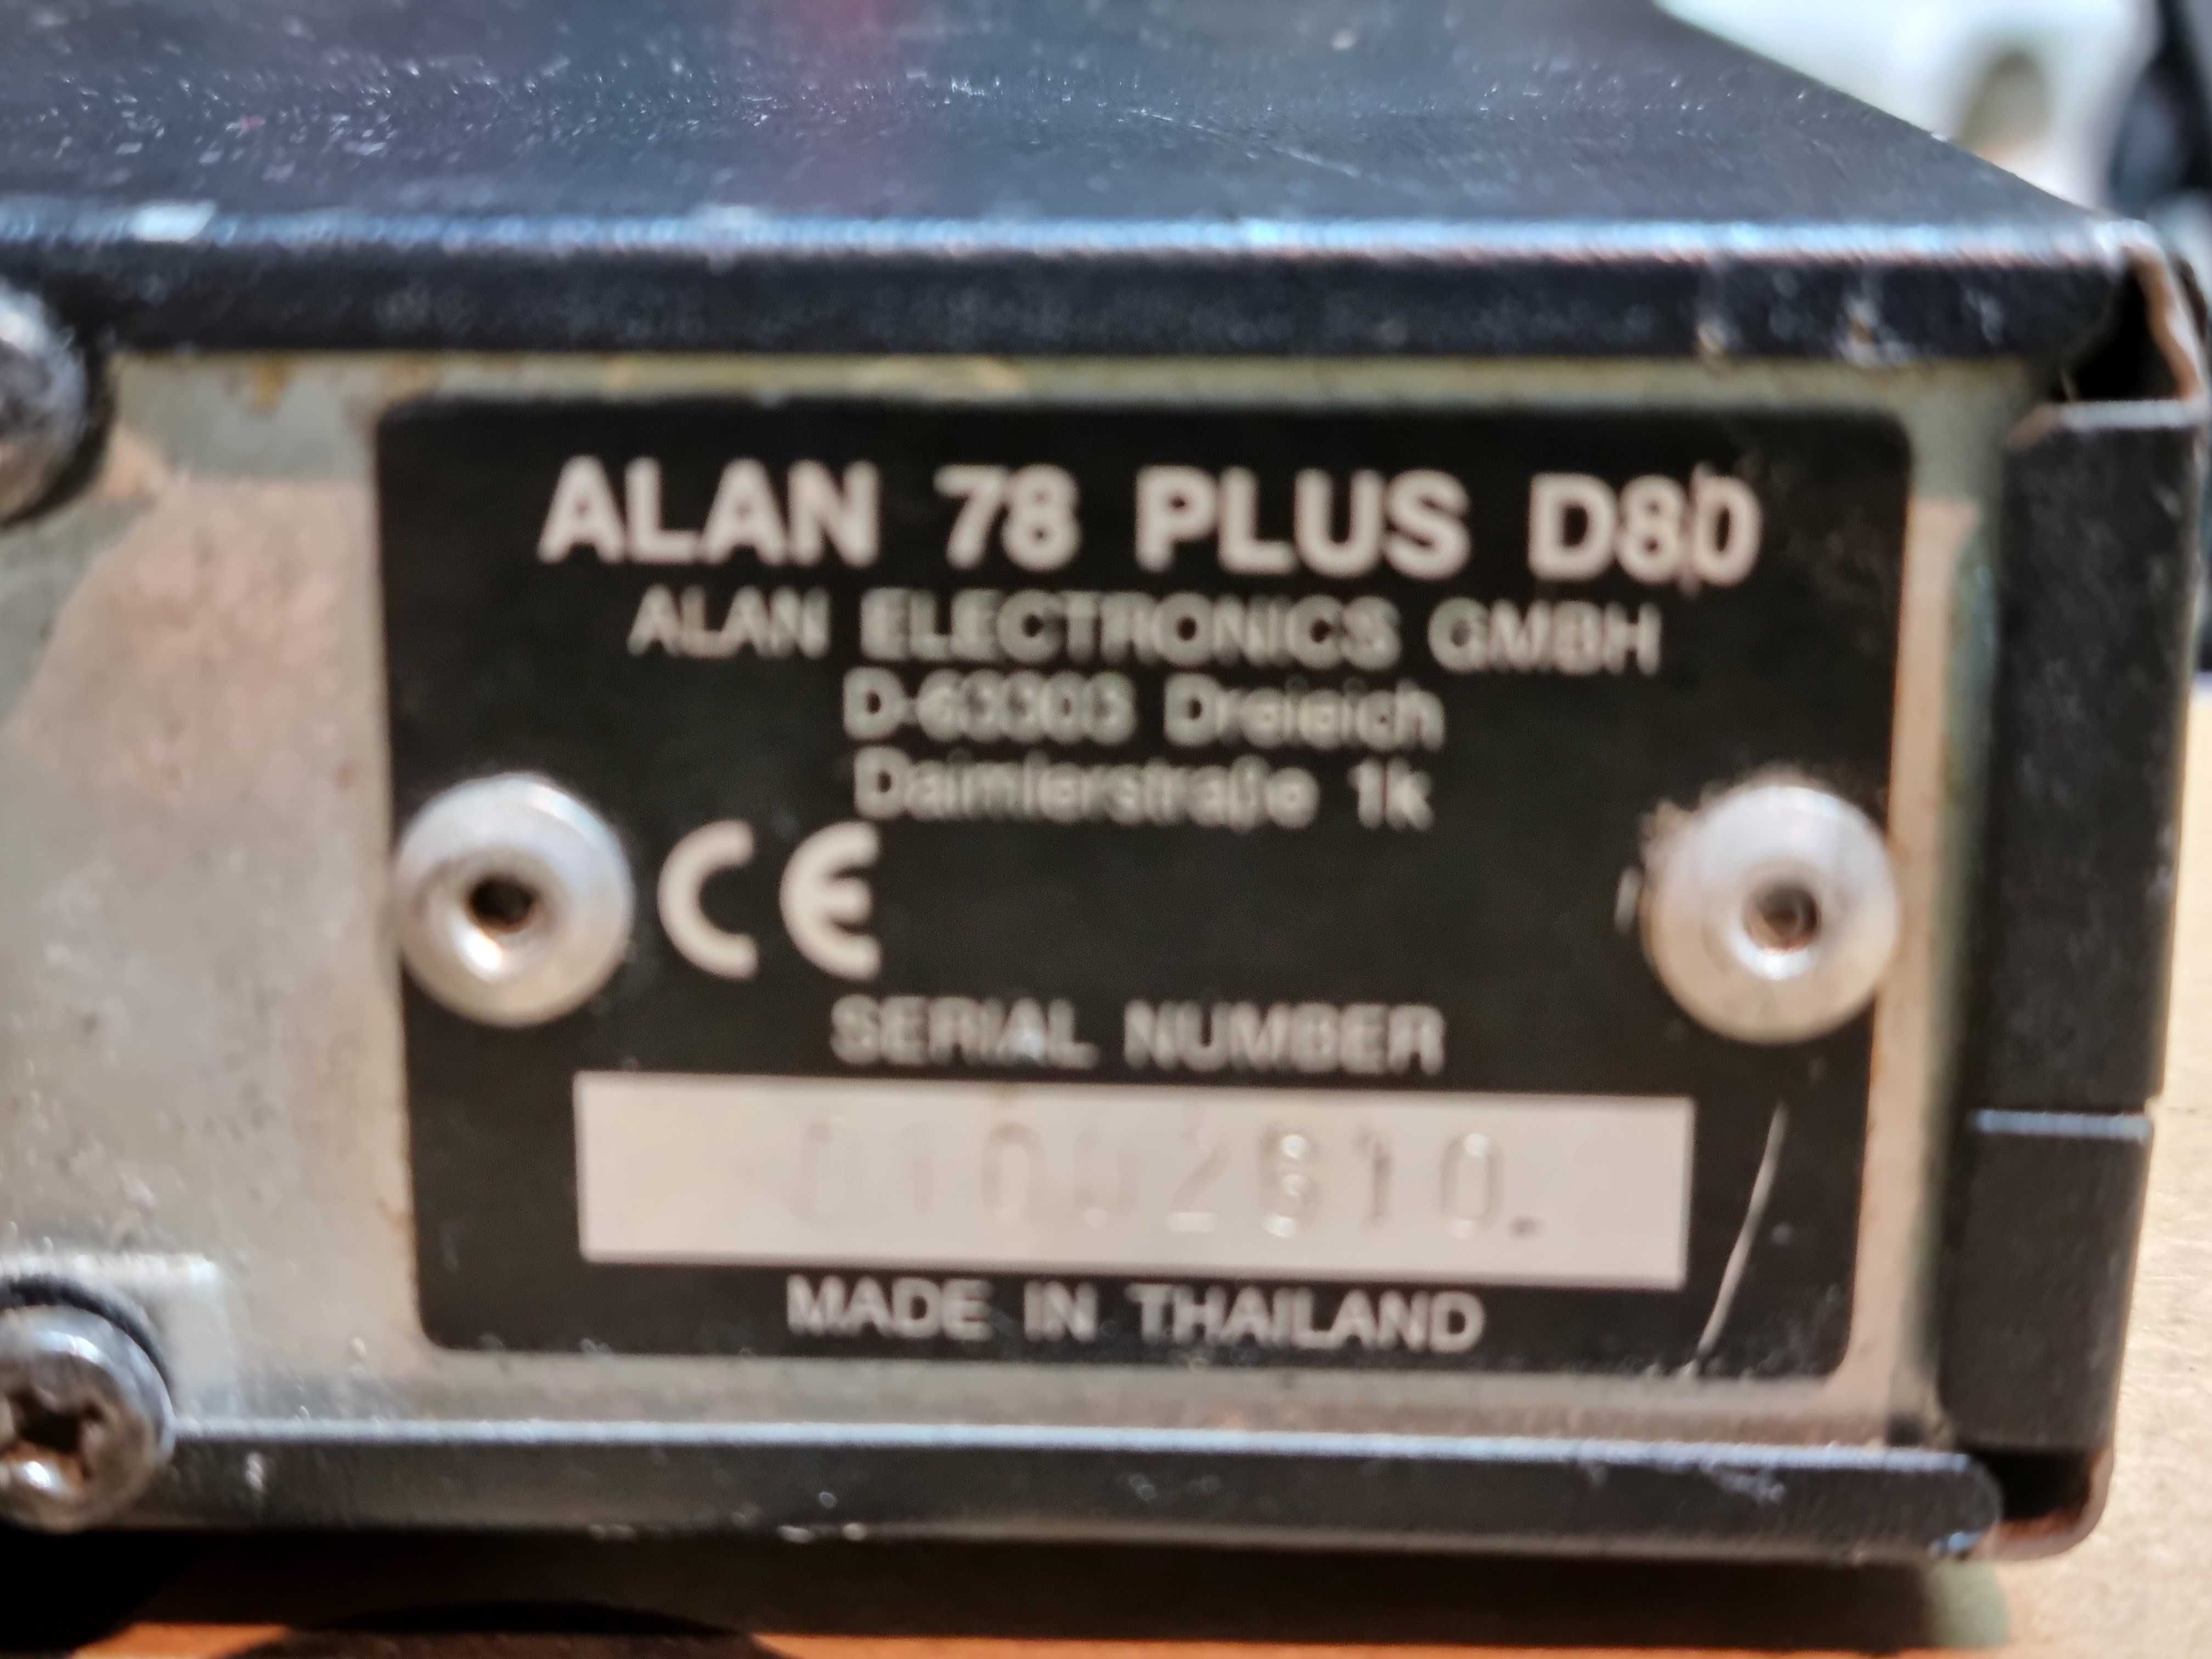 Statie radio CB Midland Alan 78 Plus Multi B